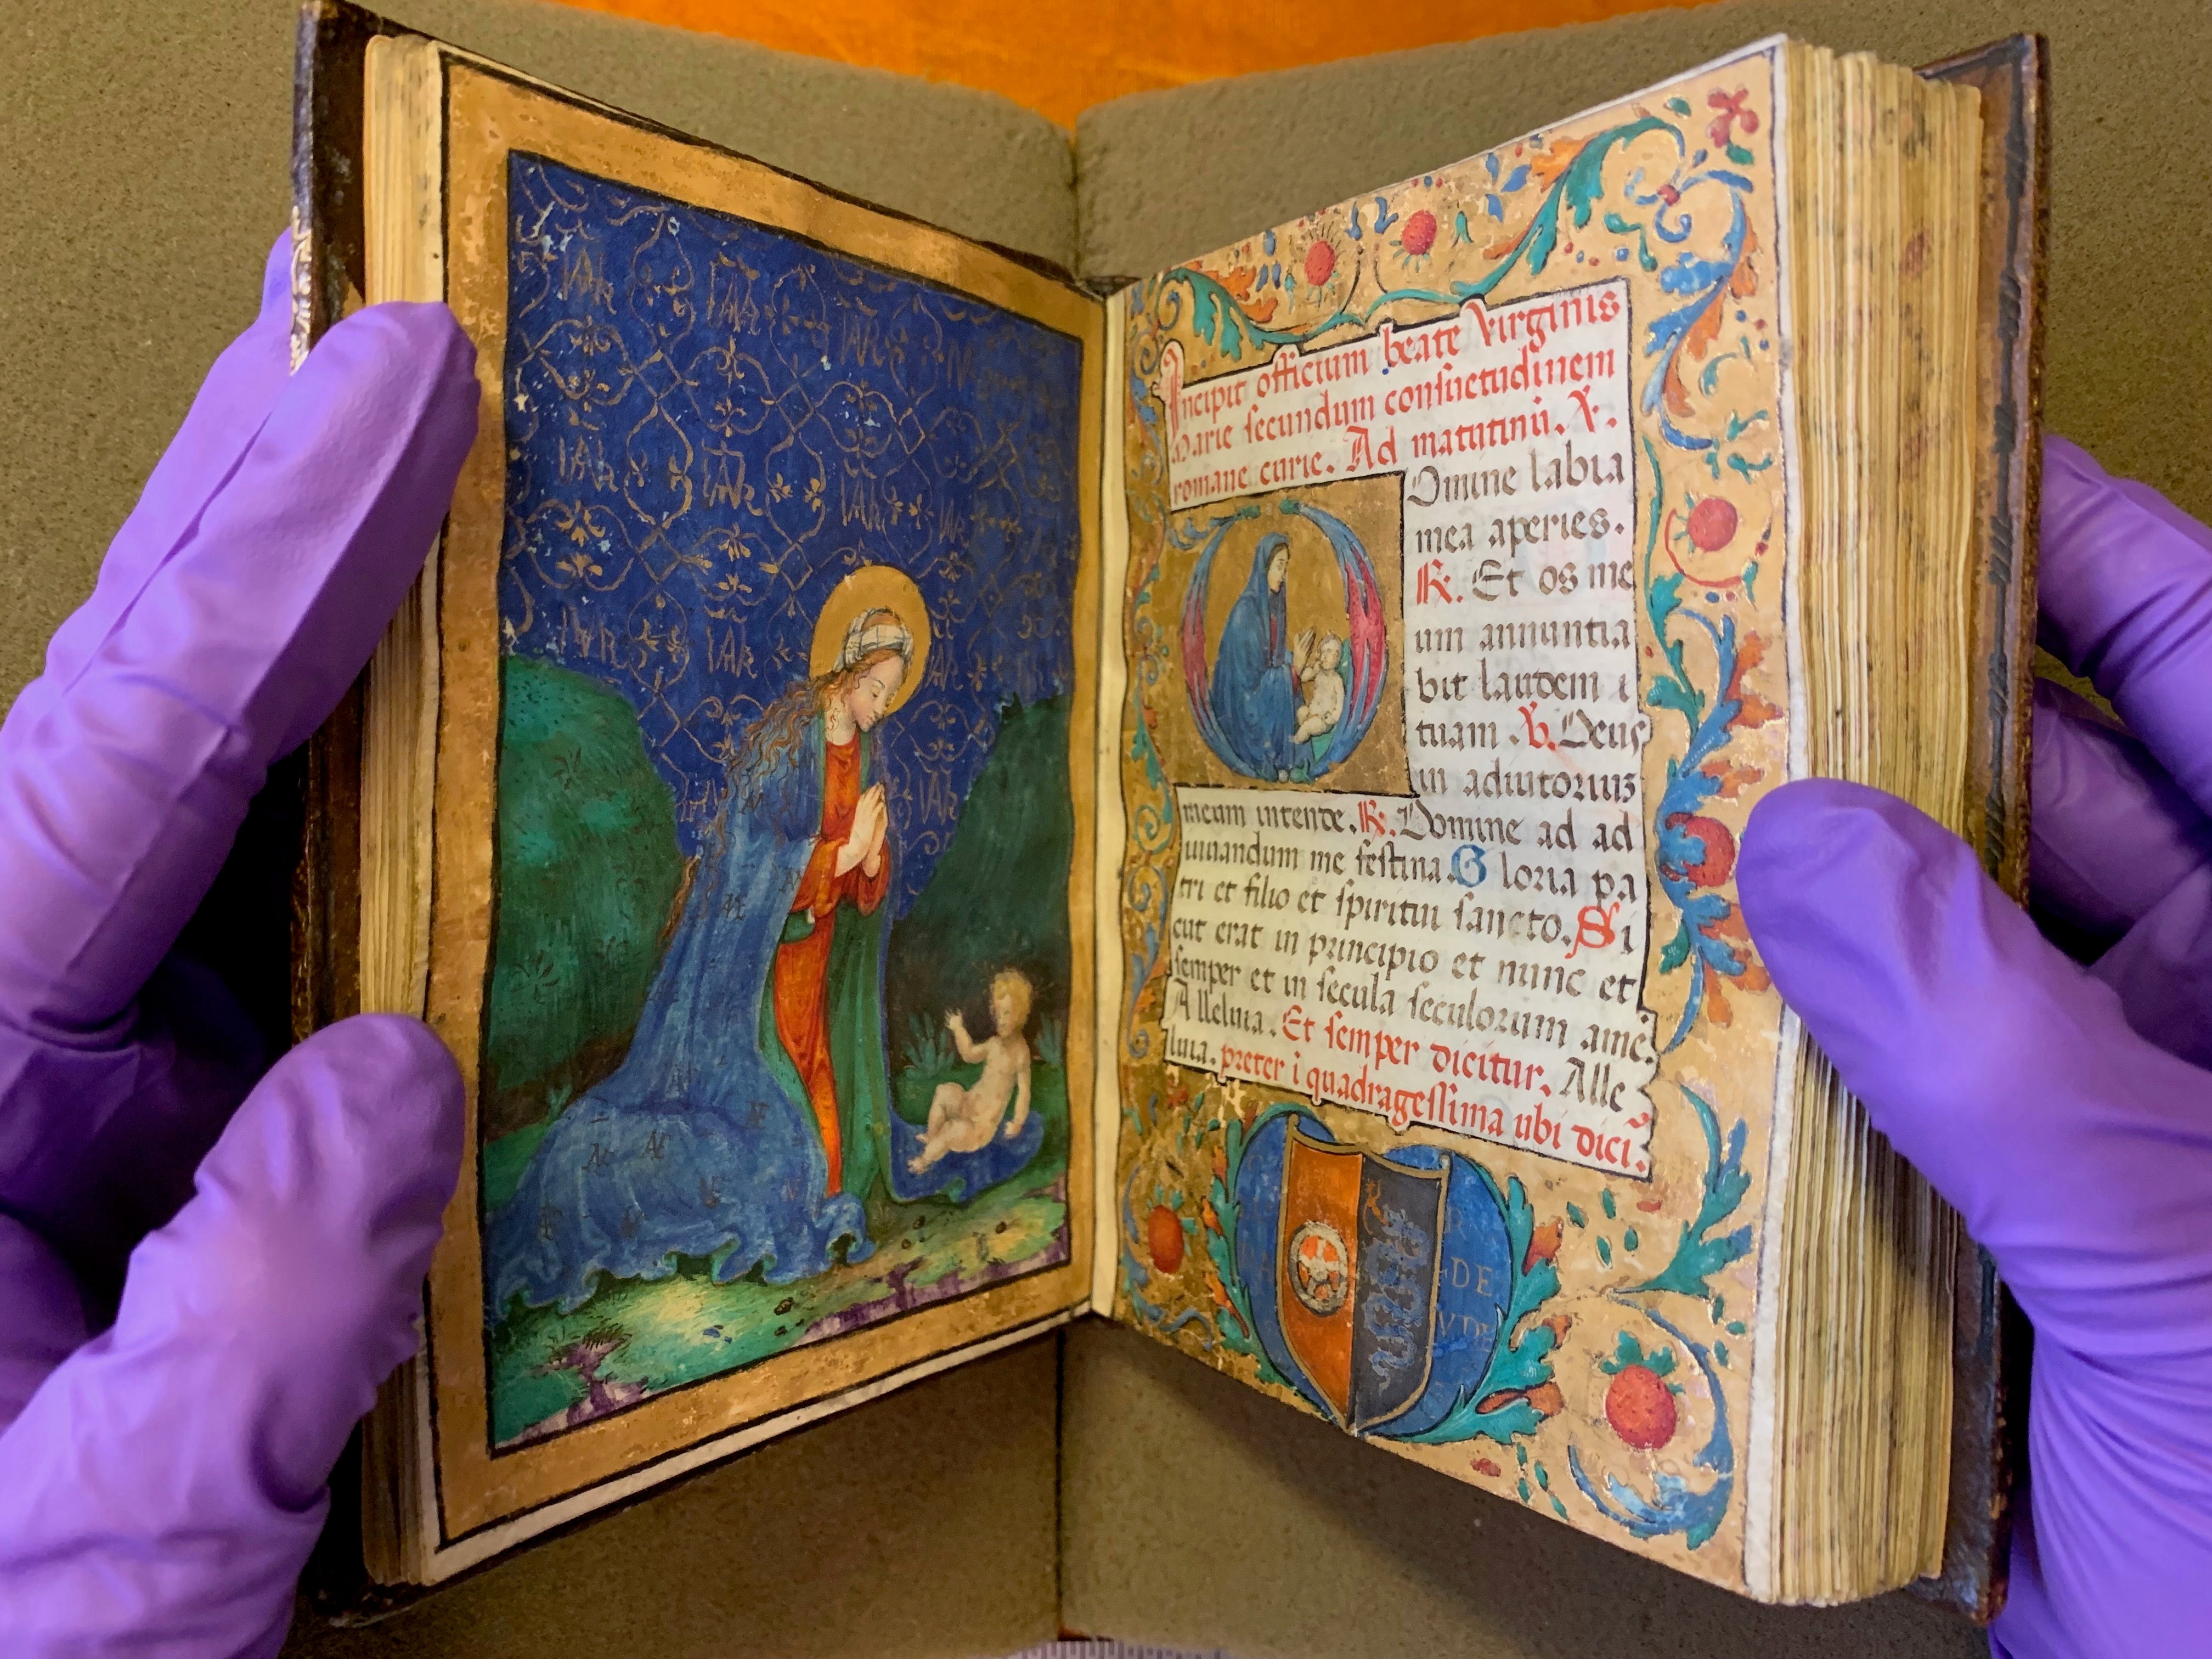 Book from Making the Renaissance Manuscript exhibit.